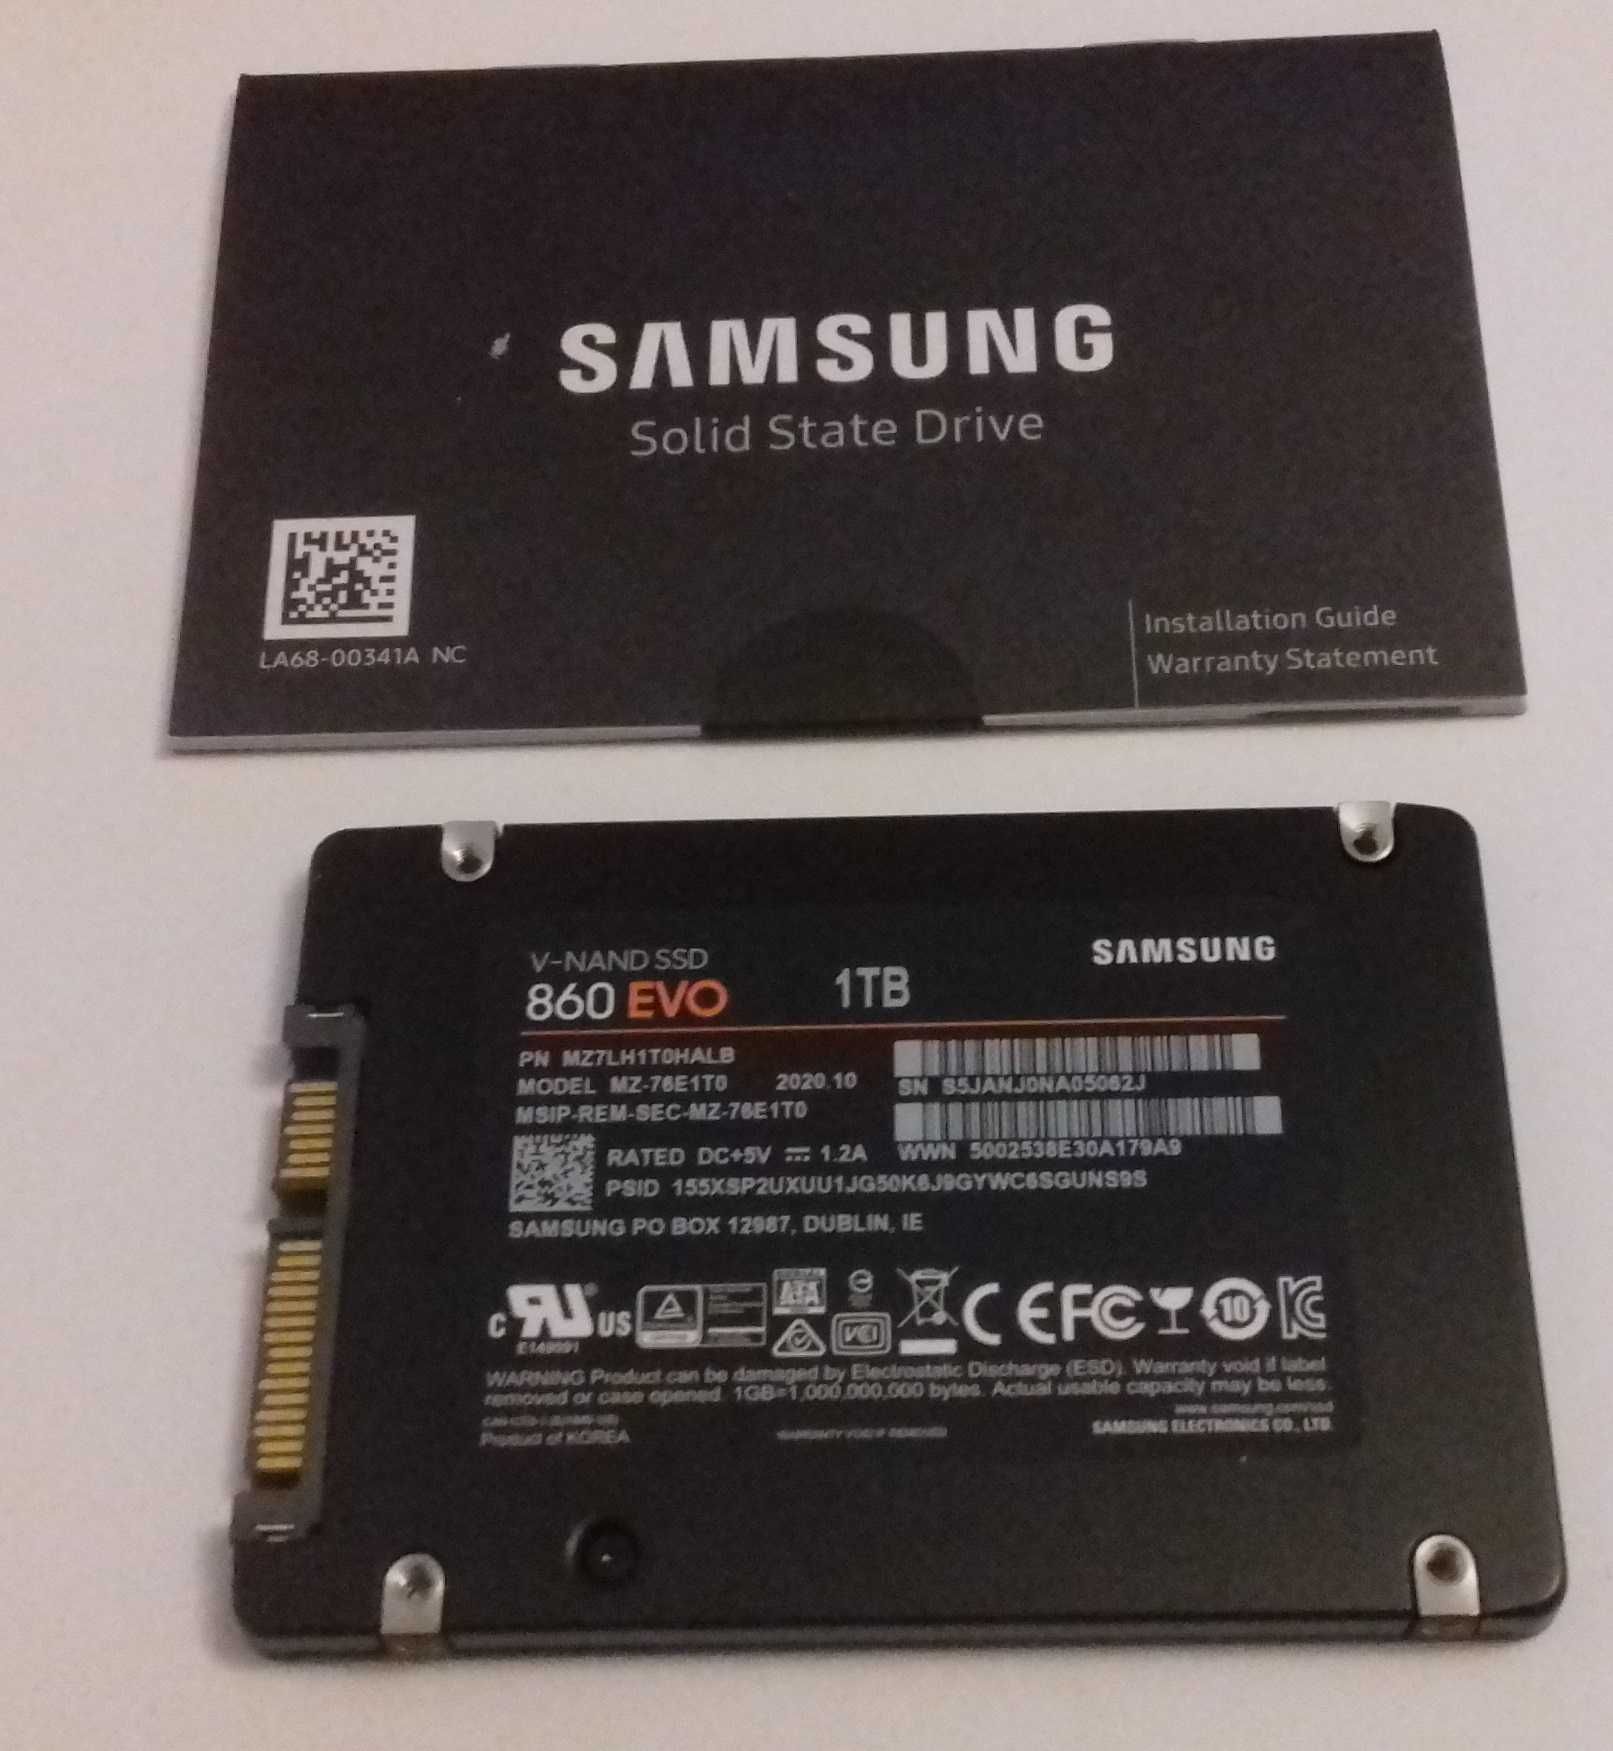 Samsung-860 evo-1tb. Dysk ssd- inne modele foto.